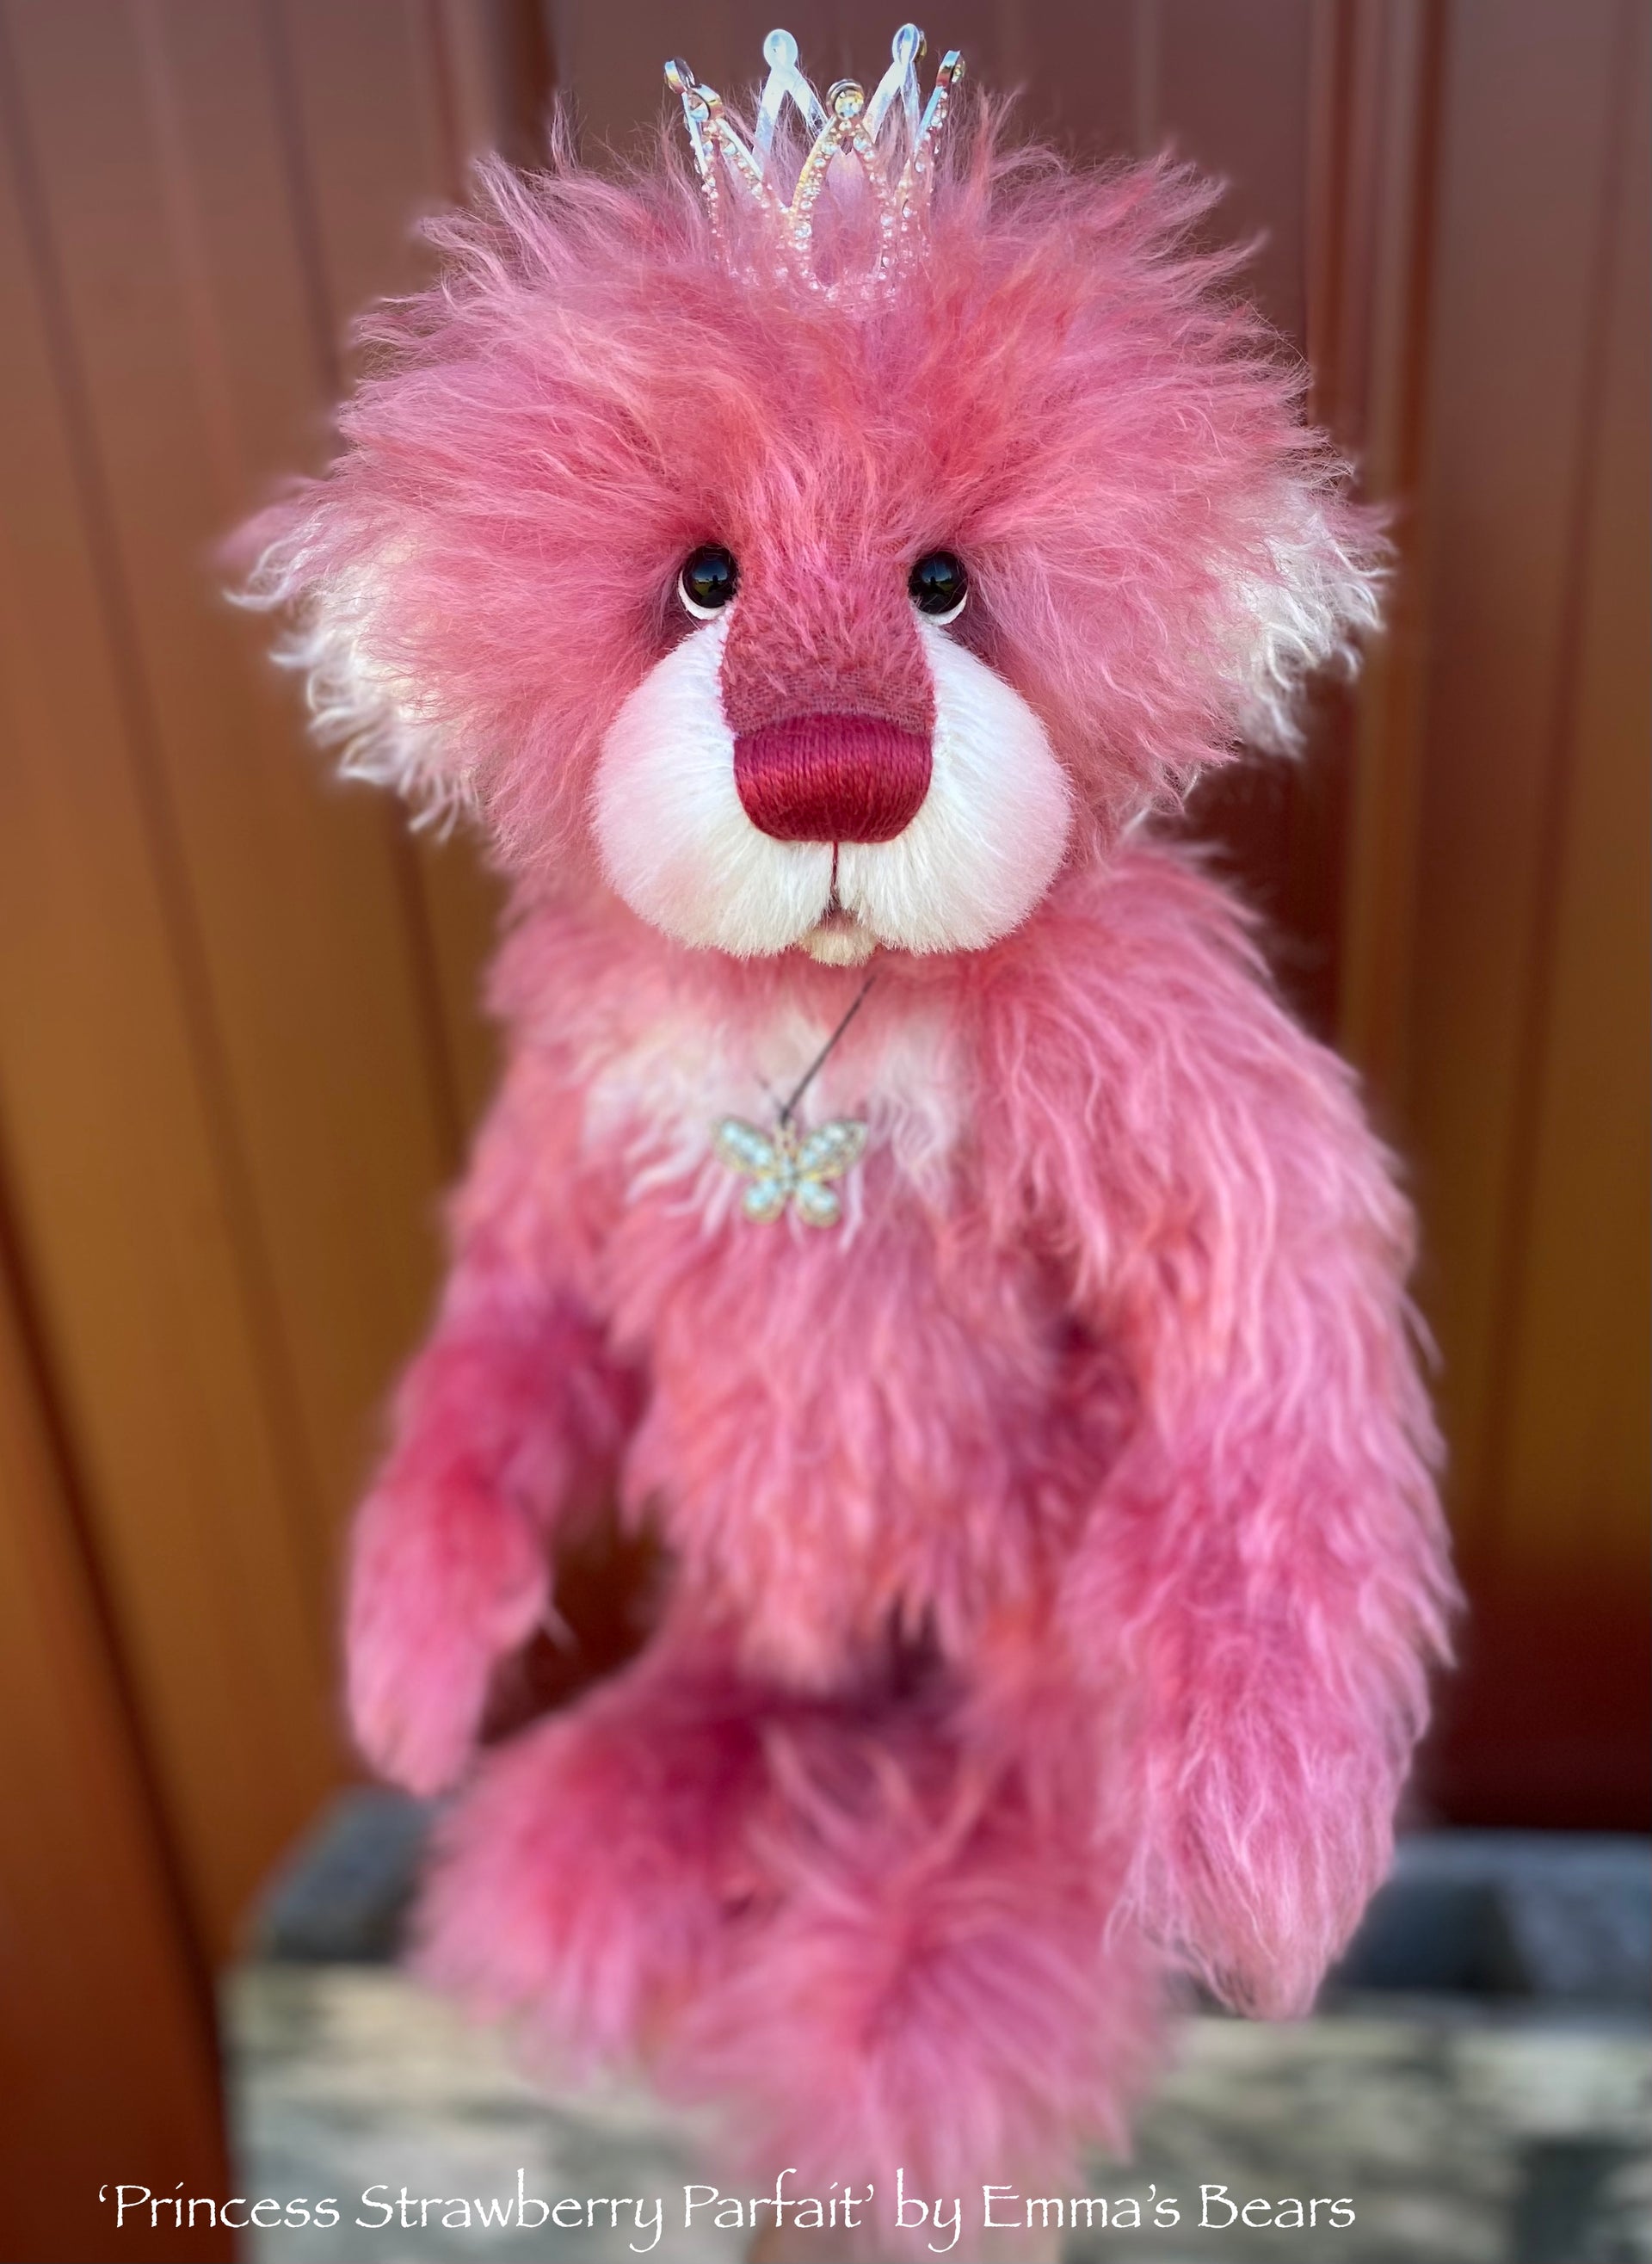 Princess Strawberry Parfait - 15" hand dyed mohair Artist Bear by Emma's Bears - OOAK